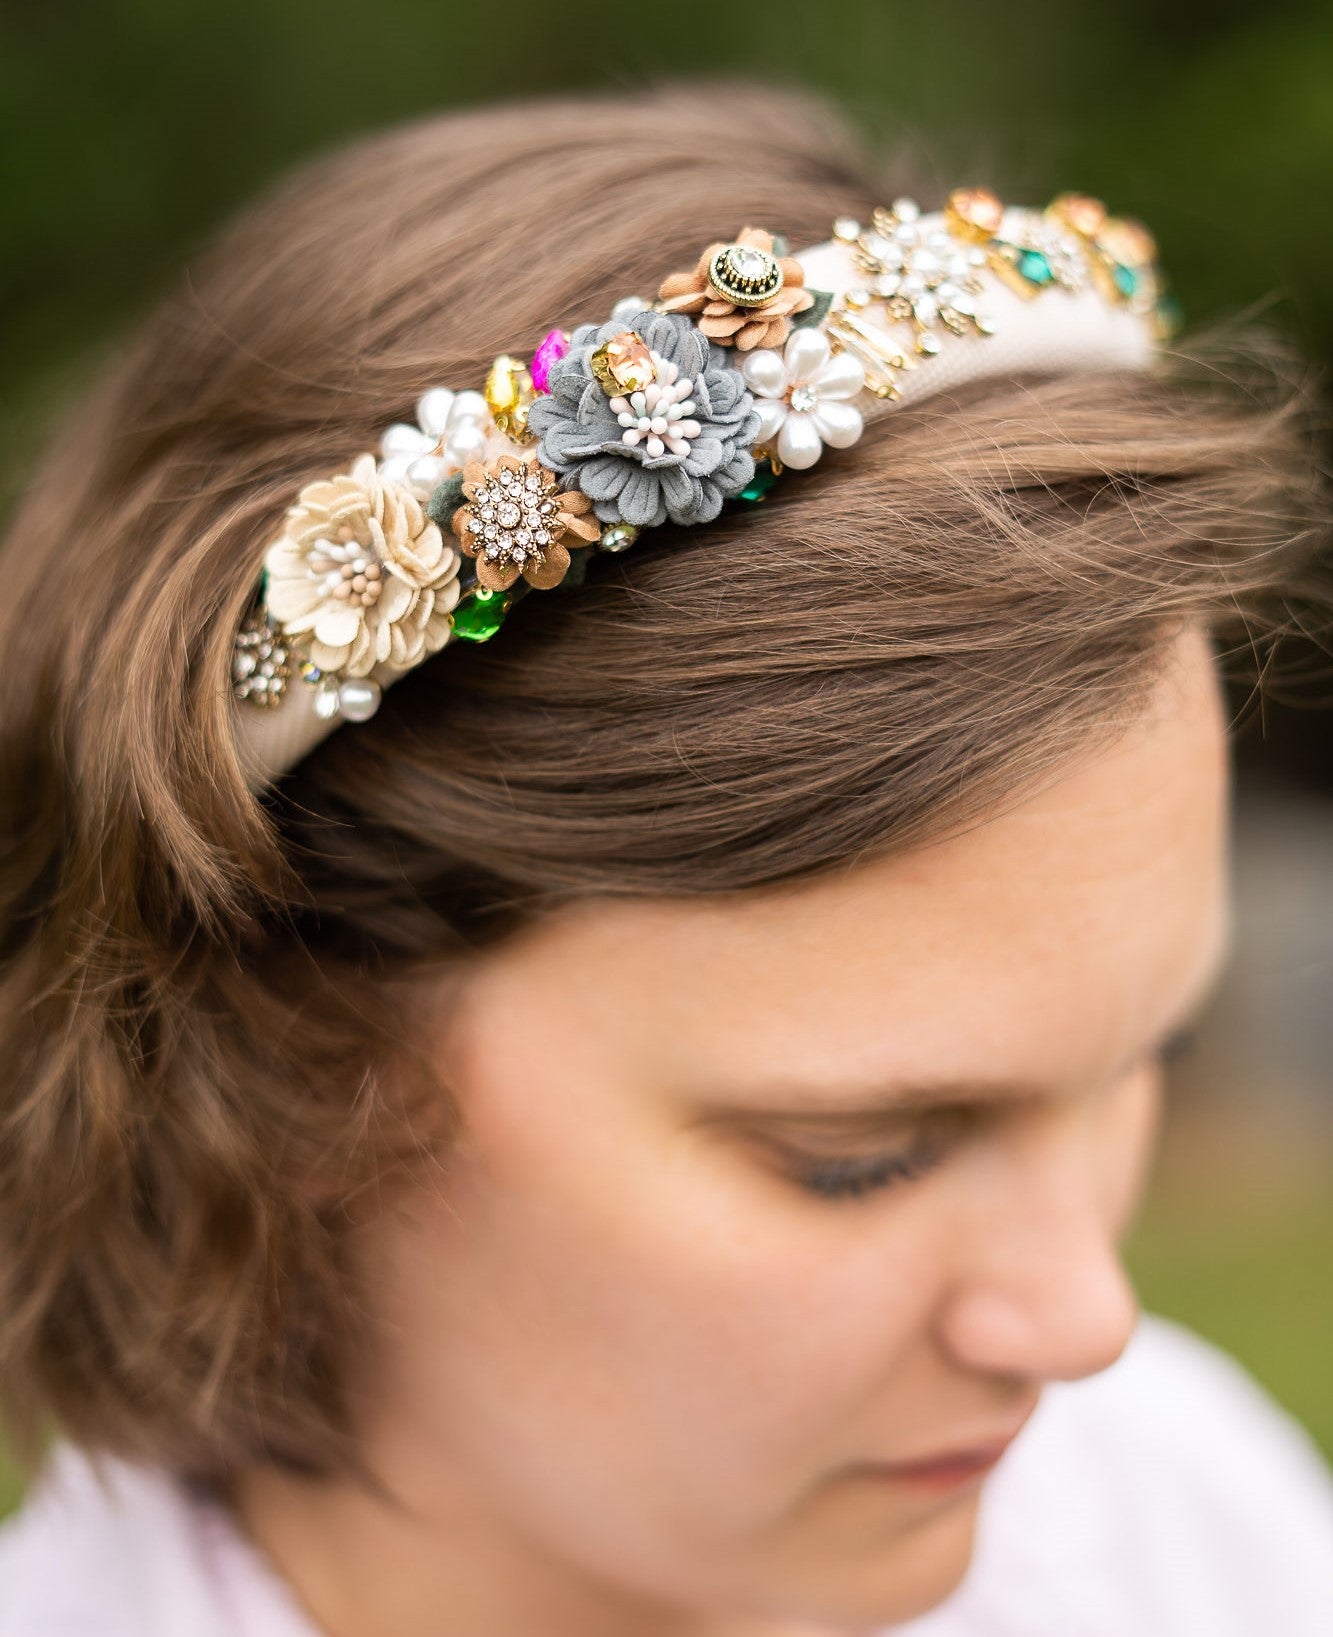 Girls Colorful Handmade Flower Hair Crown, Flower Cystal Headband